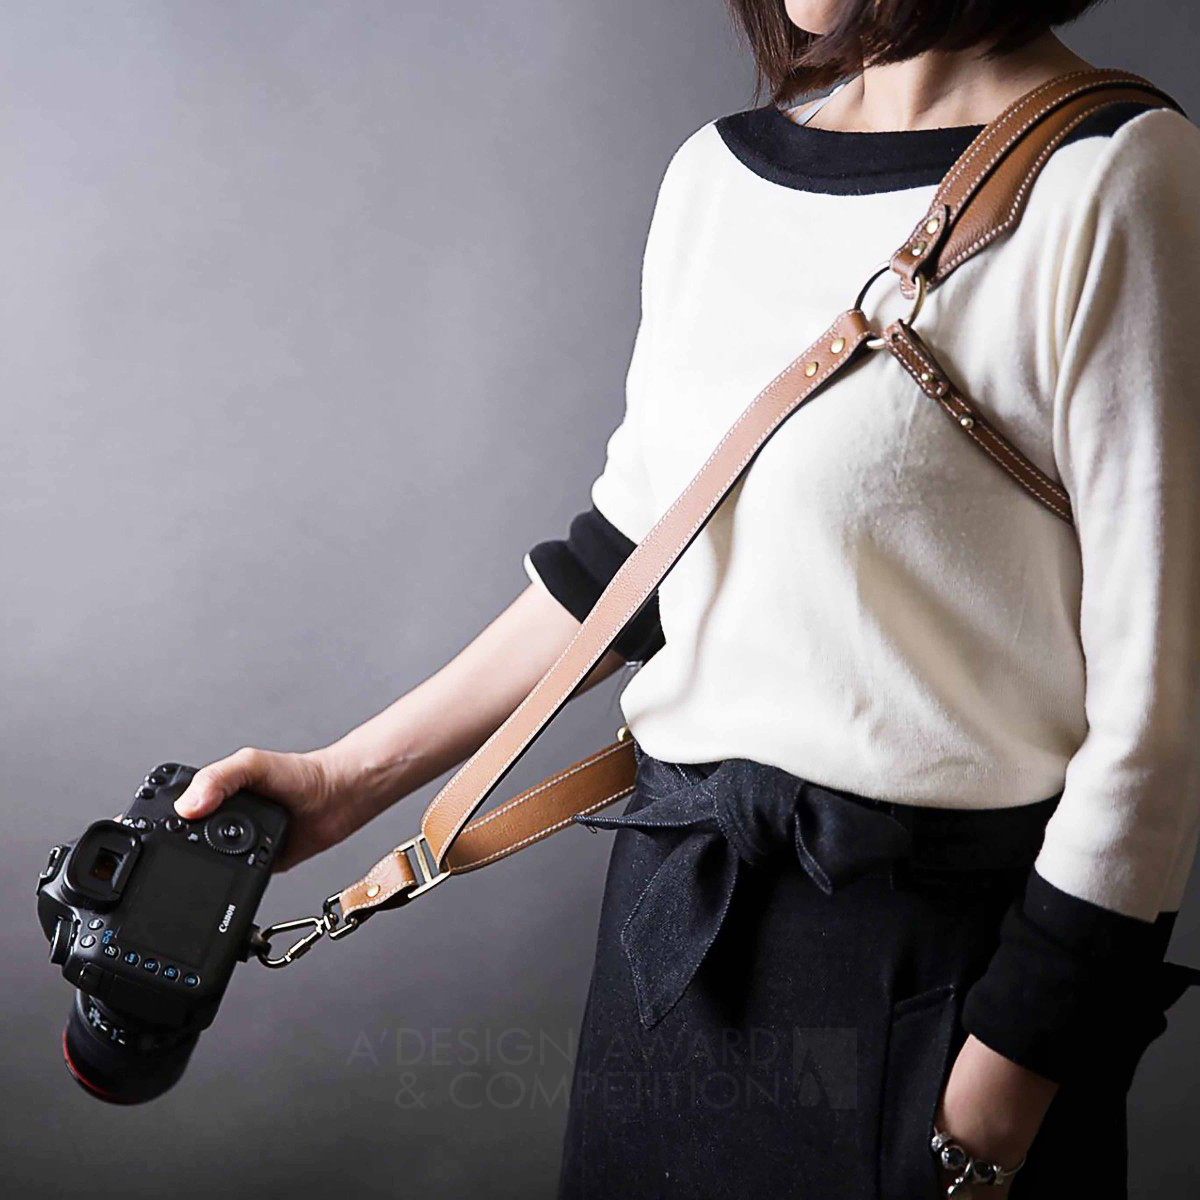 Sharpshooter: Инновационный ремень для камеры от Mei-Ling Lin